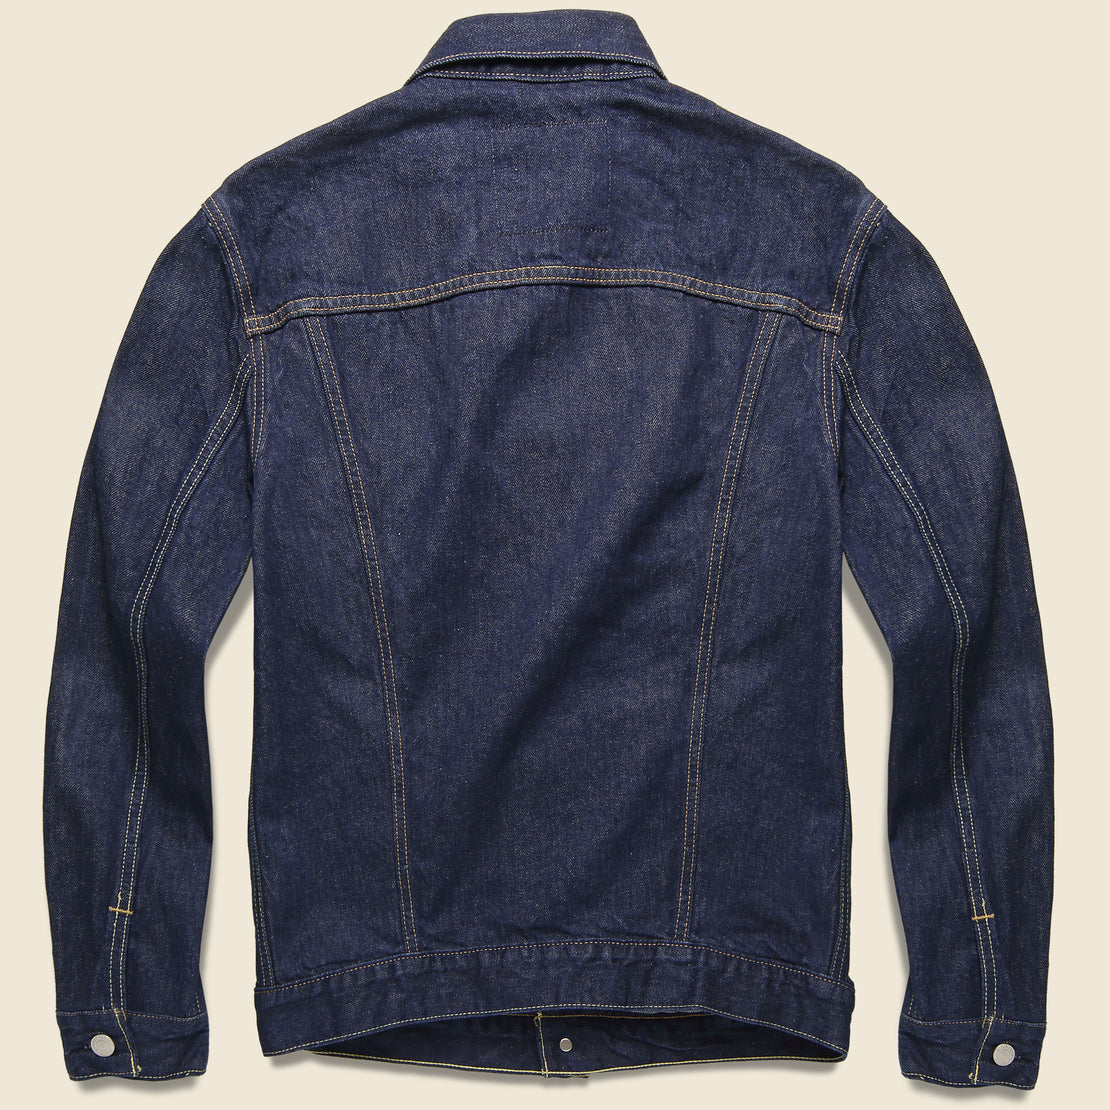 Wellthread Trucker Jacket - Indigo Rinse Hemp - Levis Premium - STAG Provisions - Outerwear - Coat / Jacket